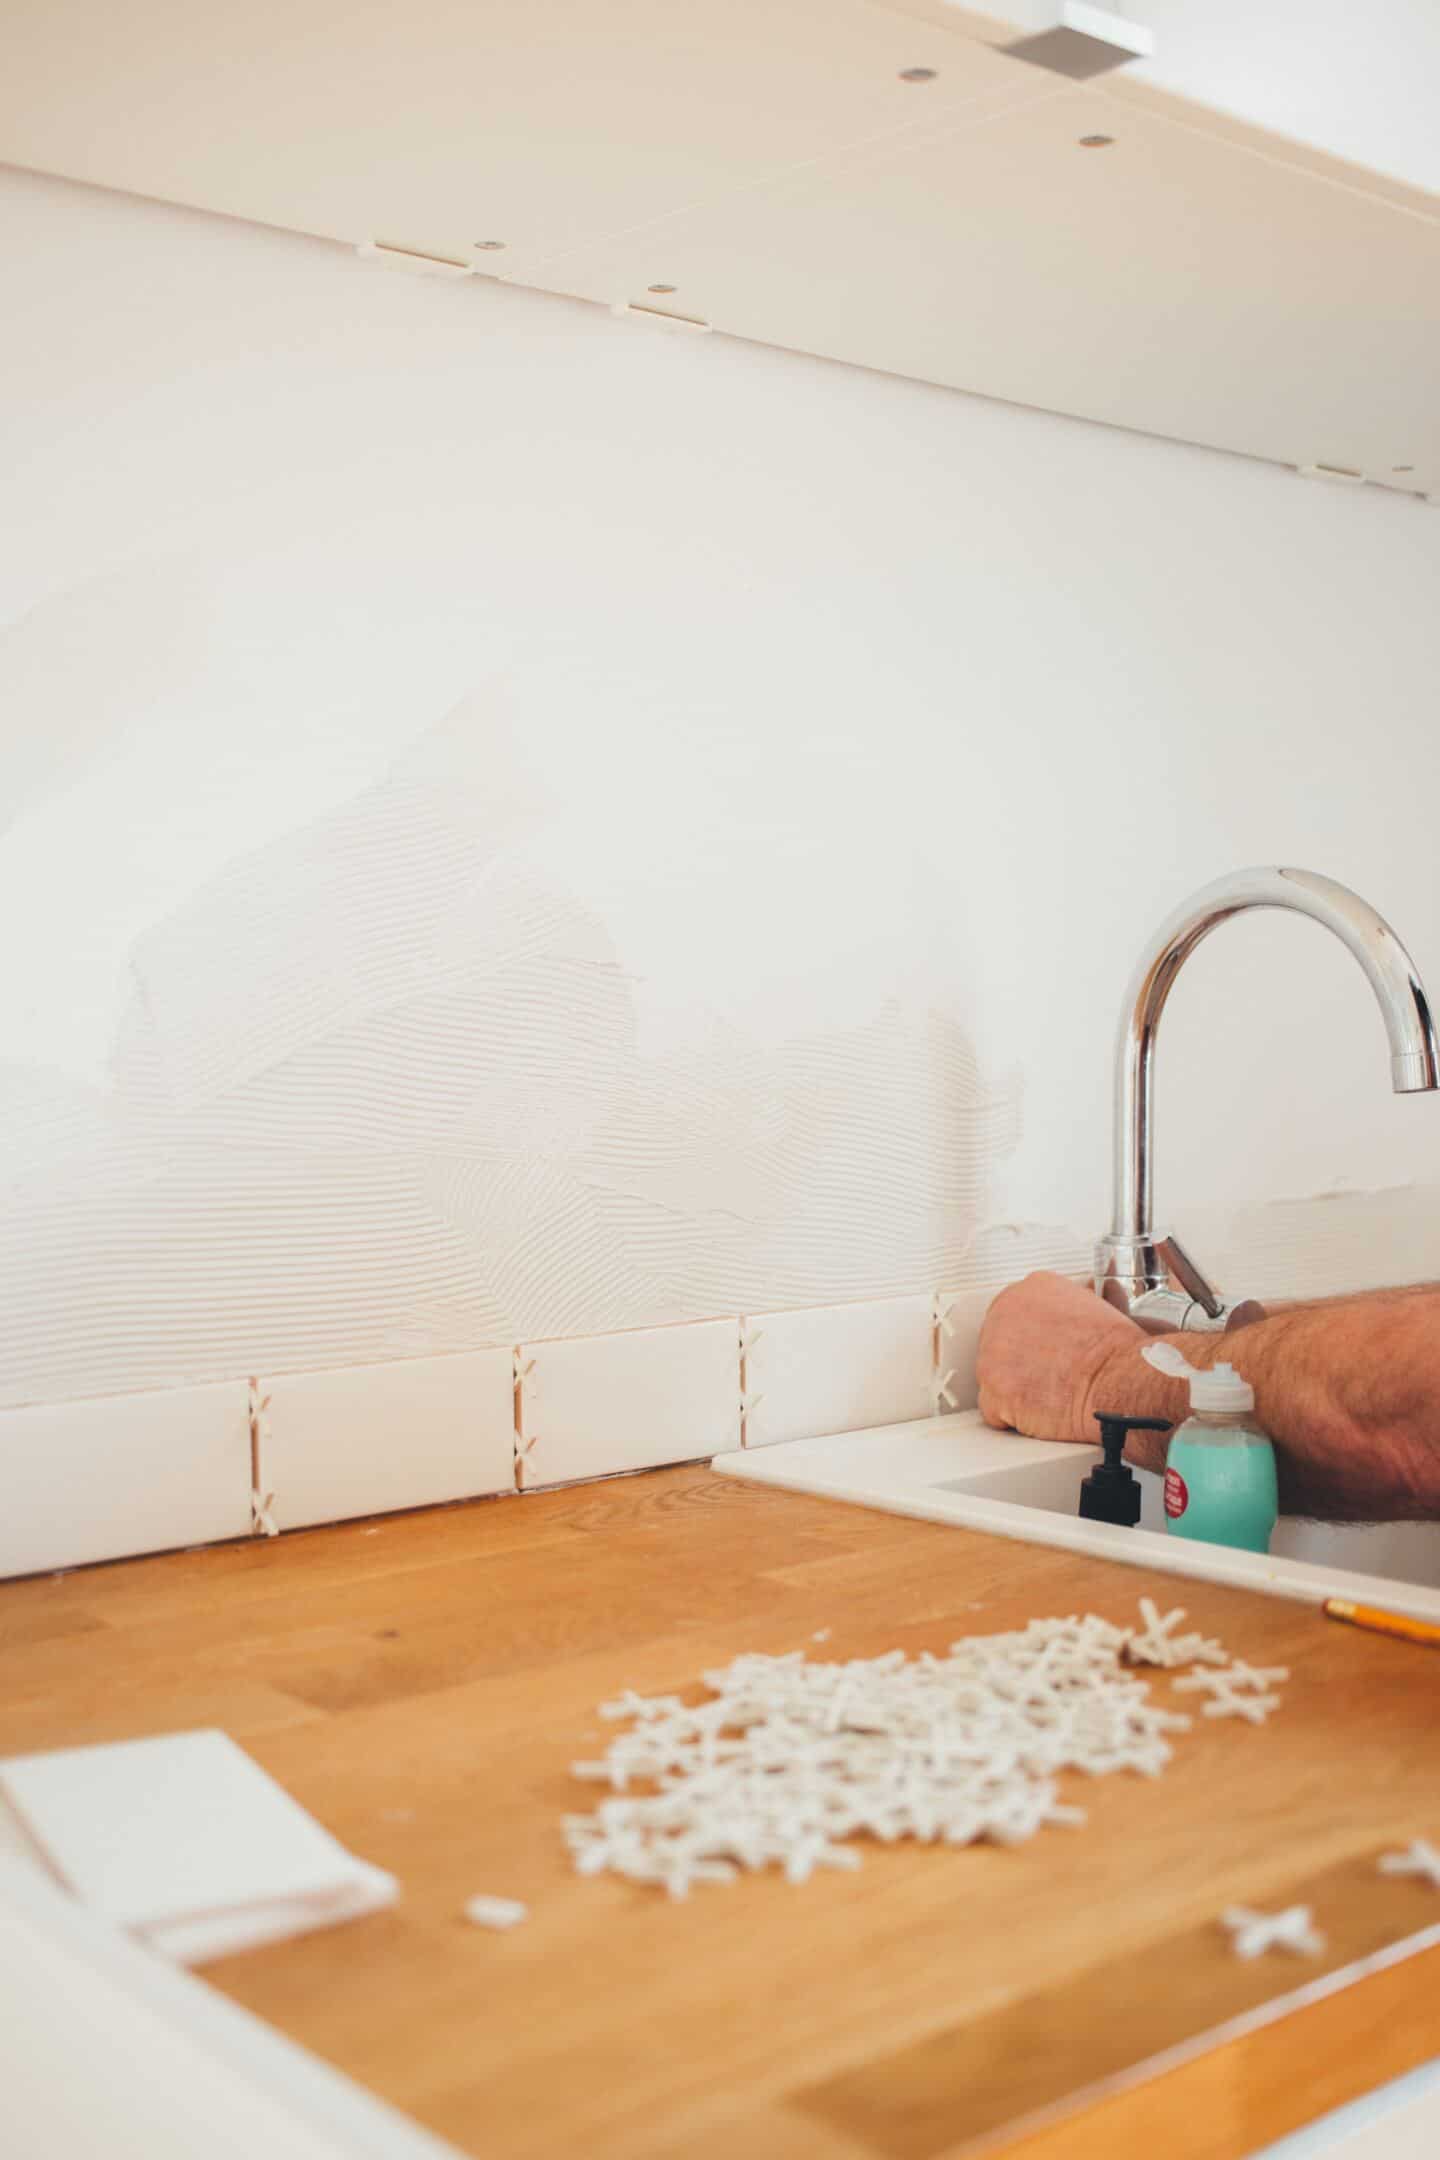 6 Easy Ways to Spruce Up Your Kitchen on a Budget - tile the kitchen backsplash